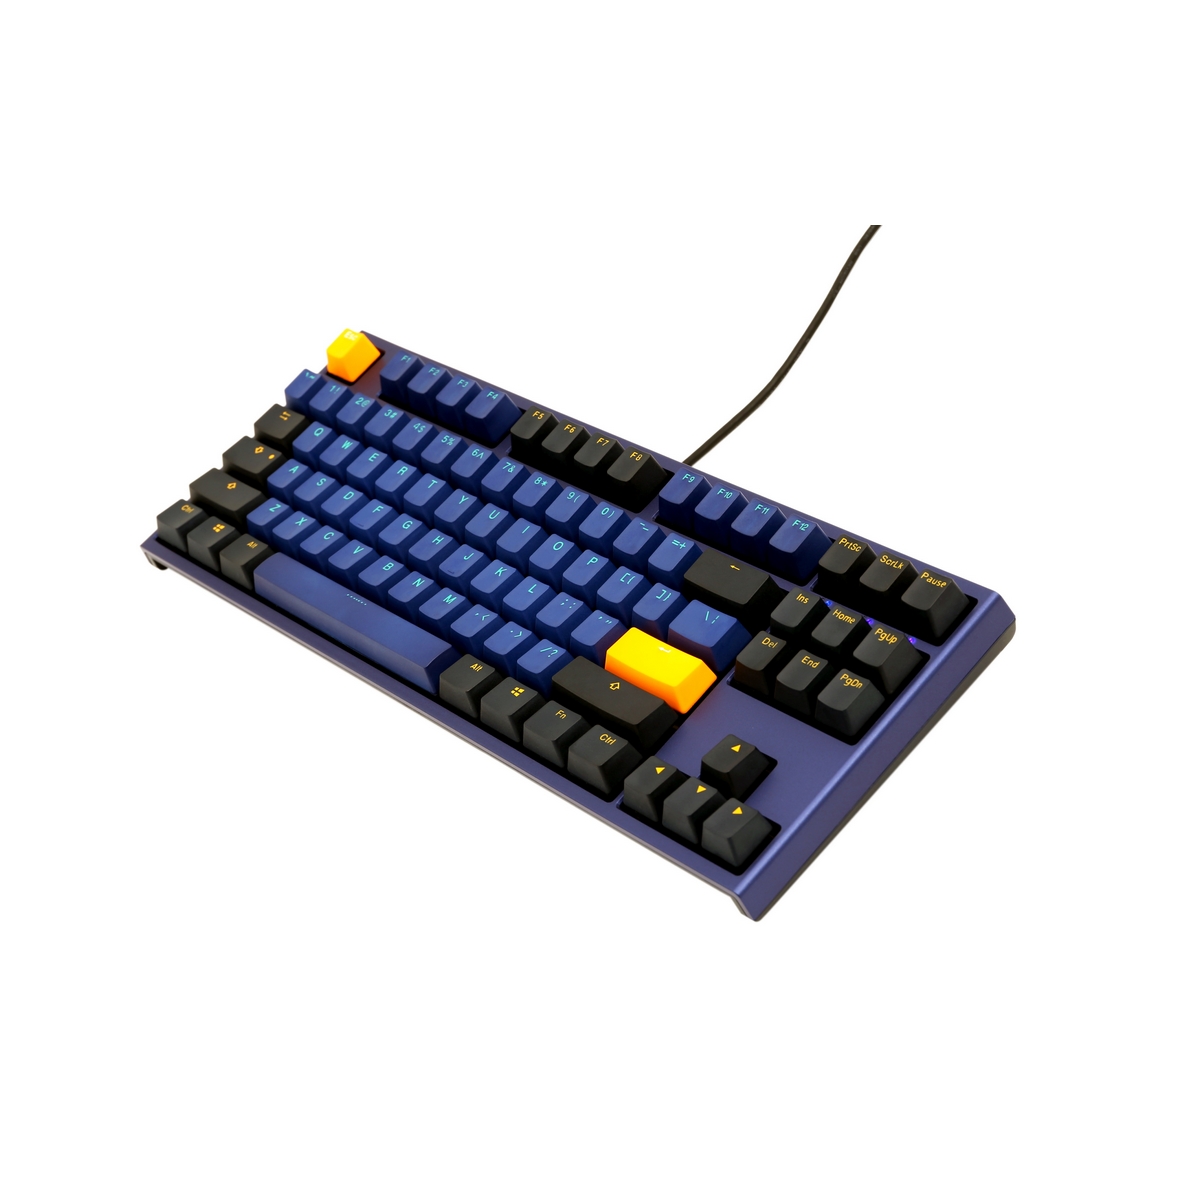 Ducky - Ducky One 2 TKL Horizon Red Cherry MX Switch USB Mechanical Gaming Keyboard UK Layout